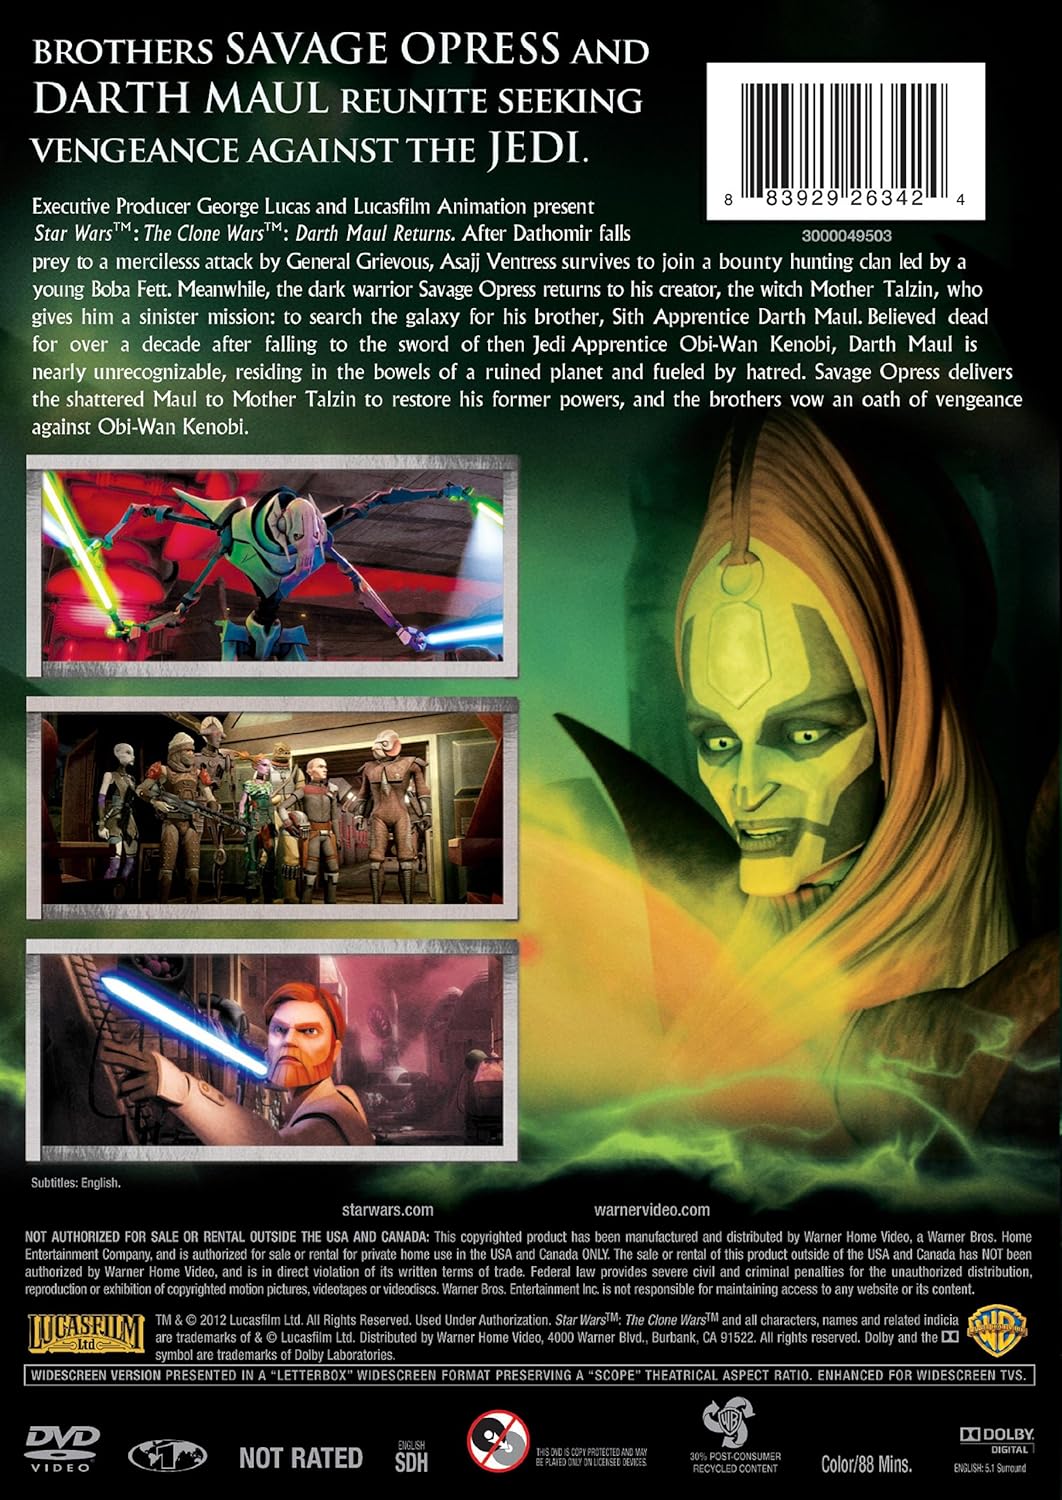 Star Wars: The Clone Wars Return of Darth Maul - Director's Cut [DVD]